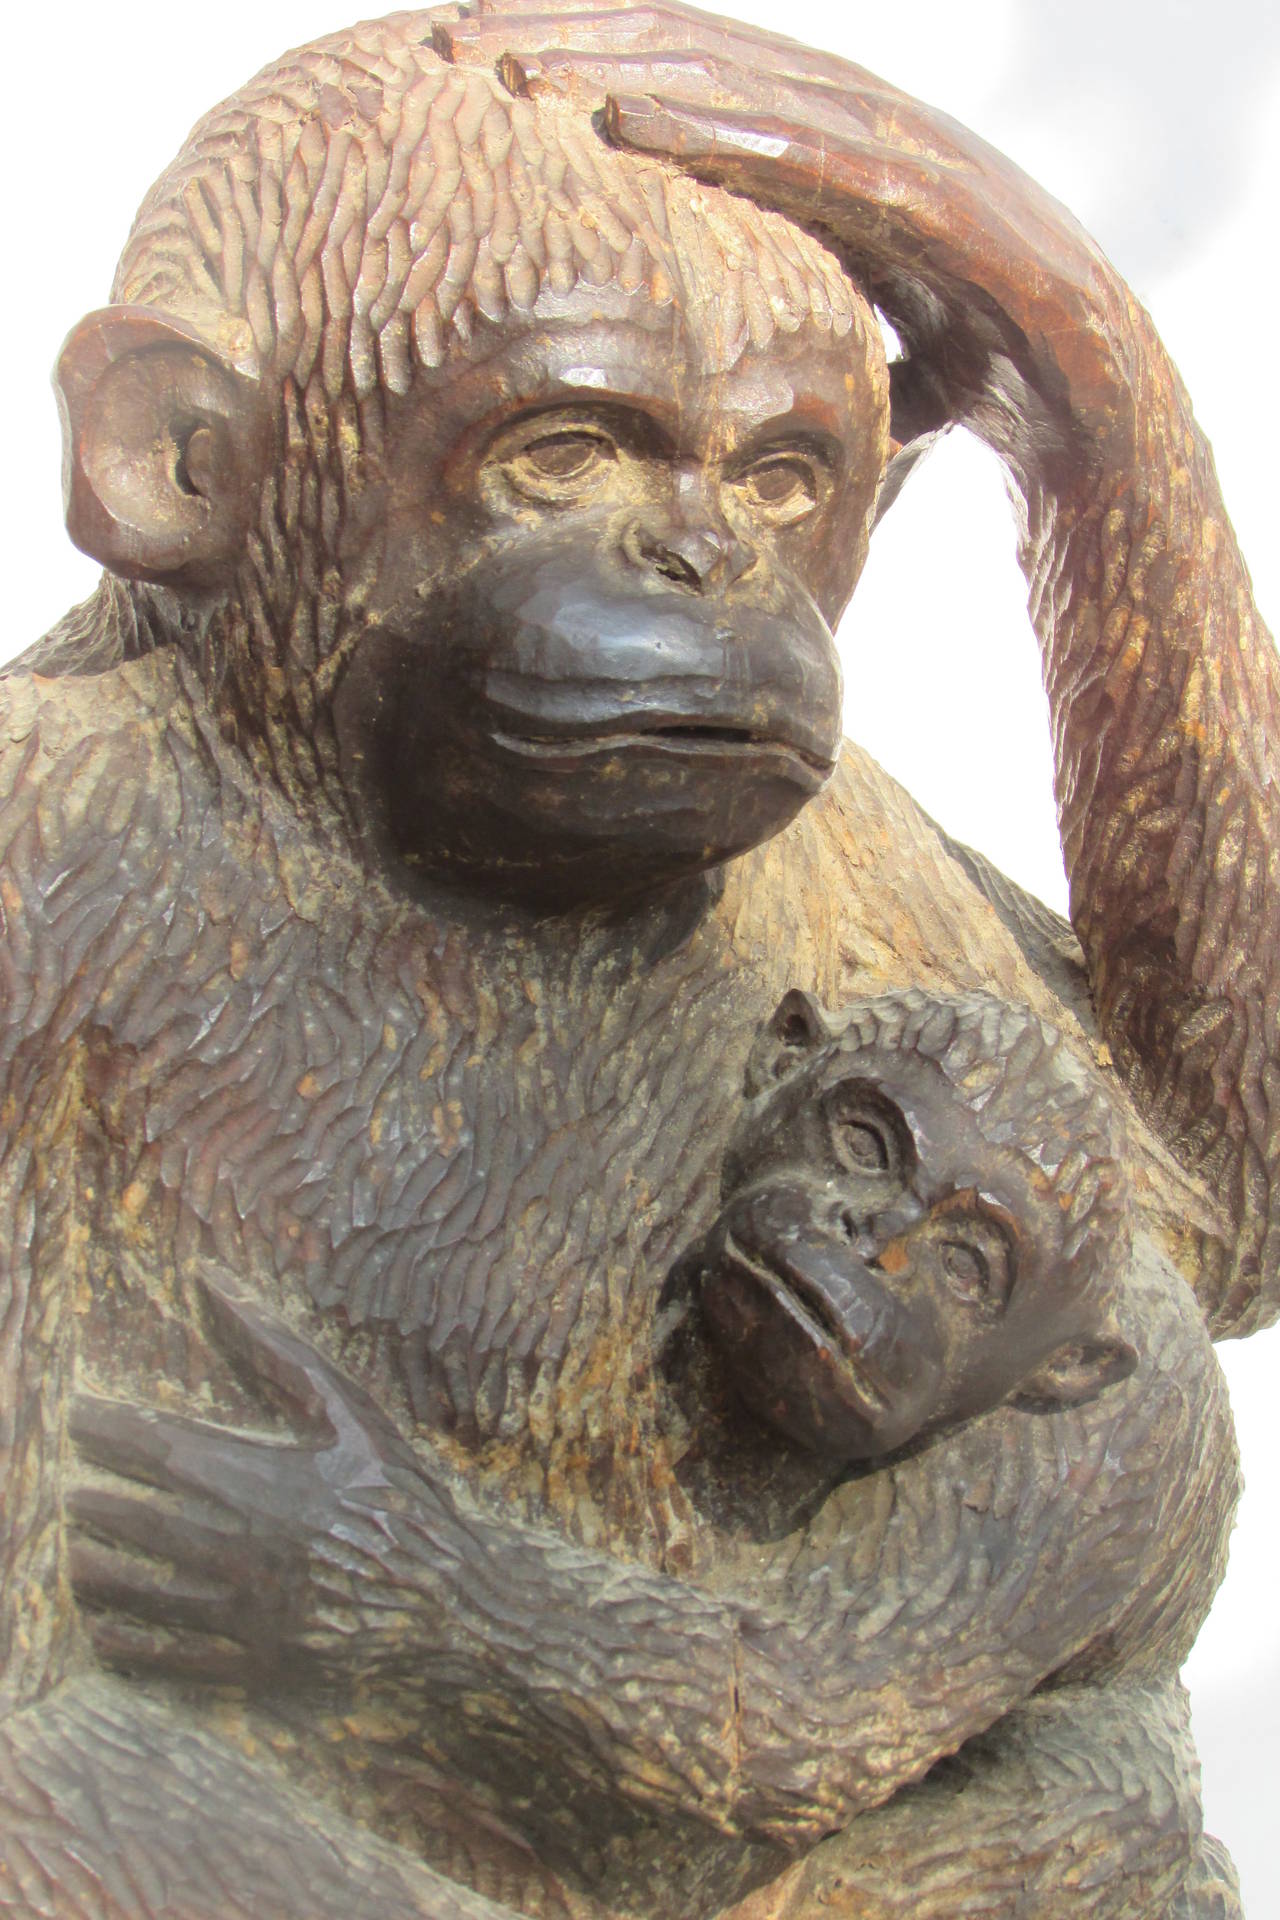 wooden monkey sculpture